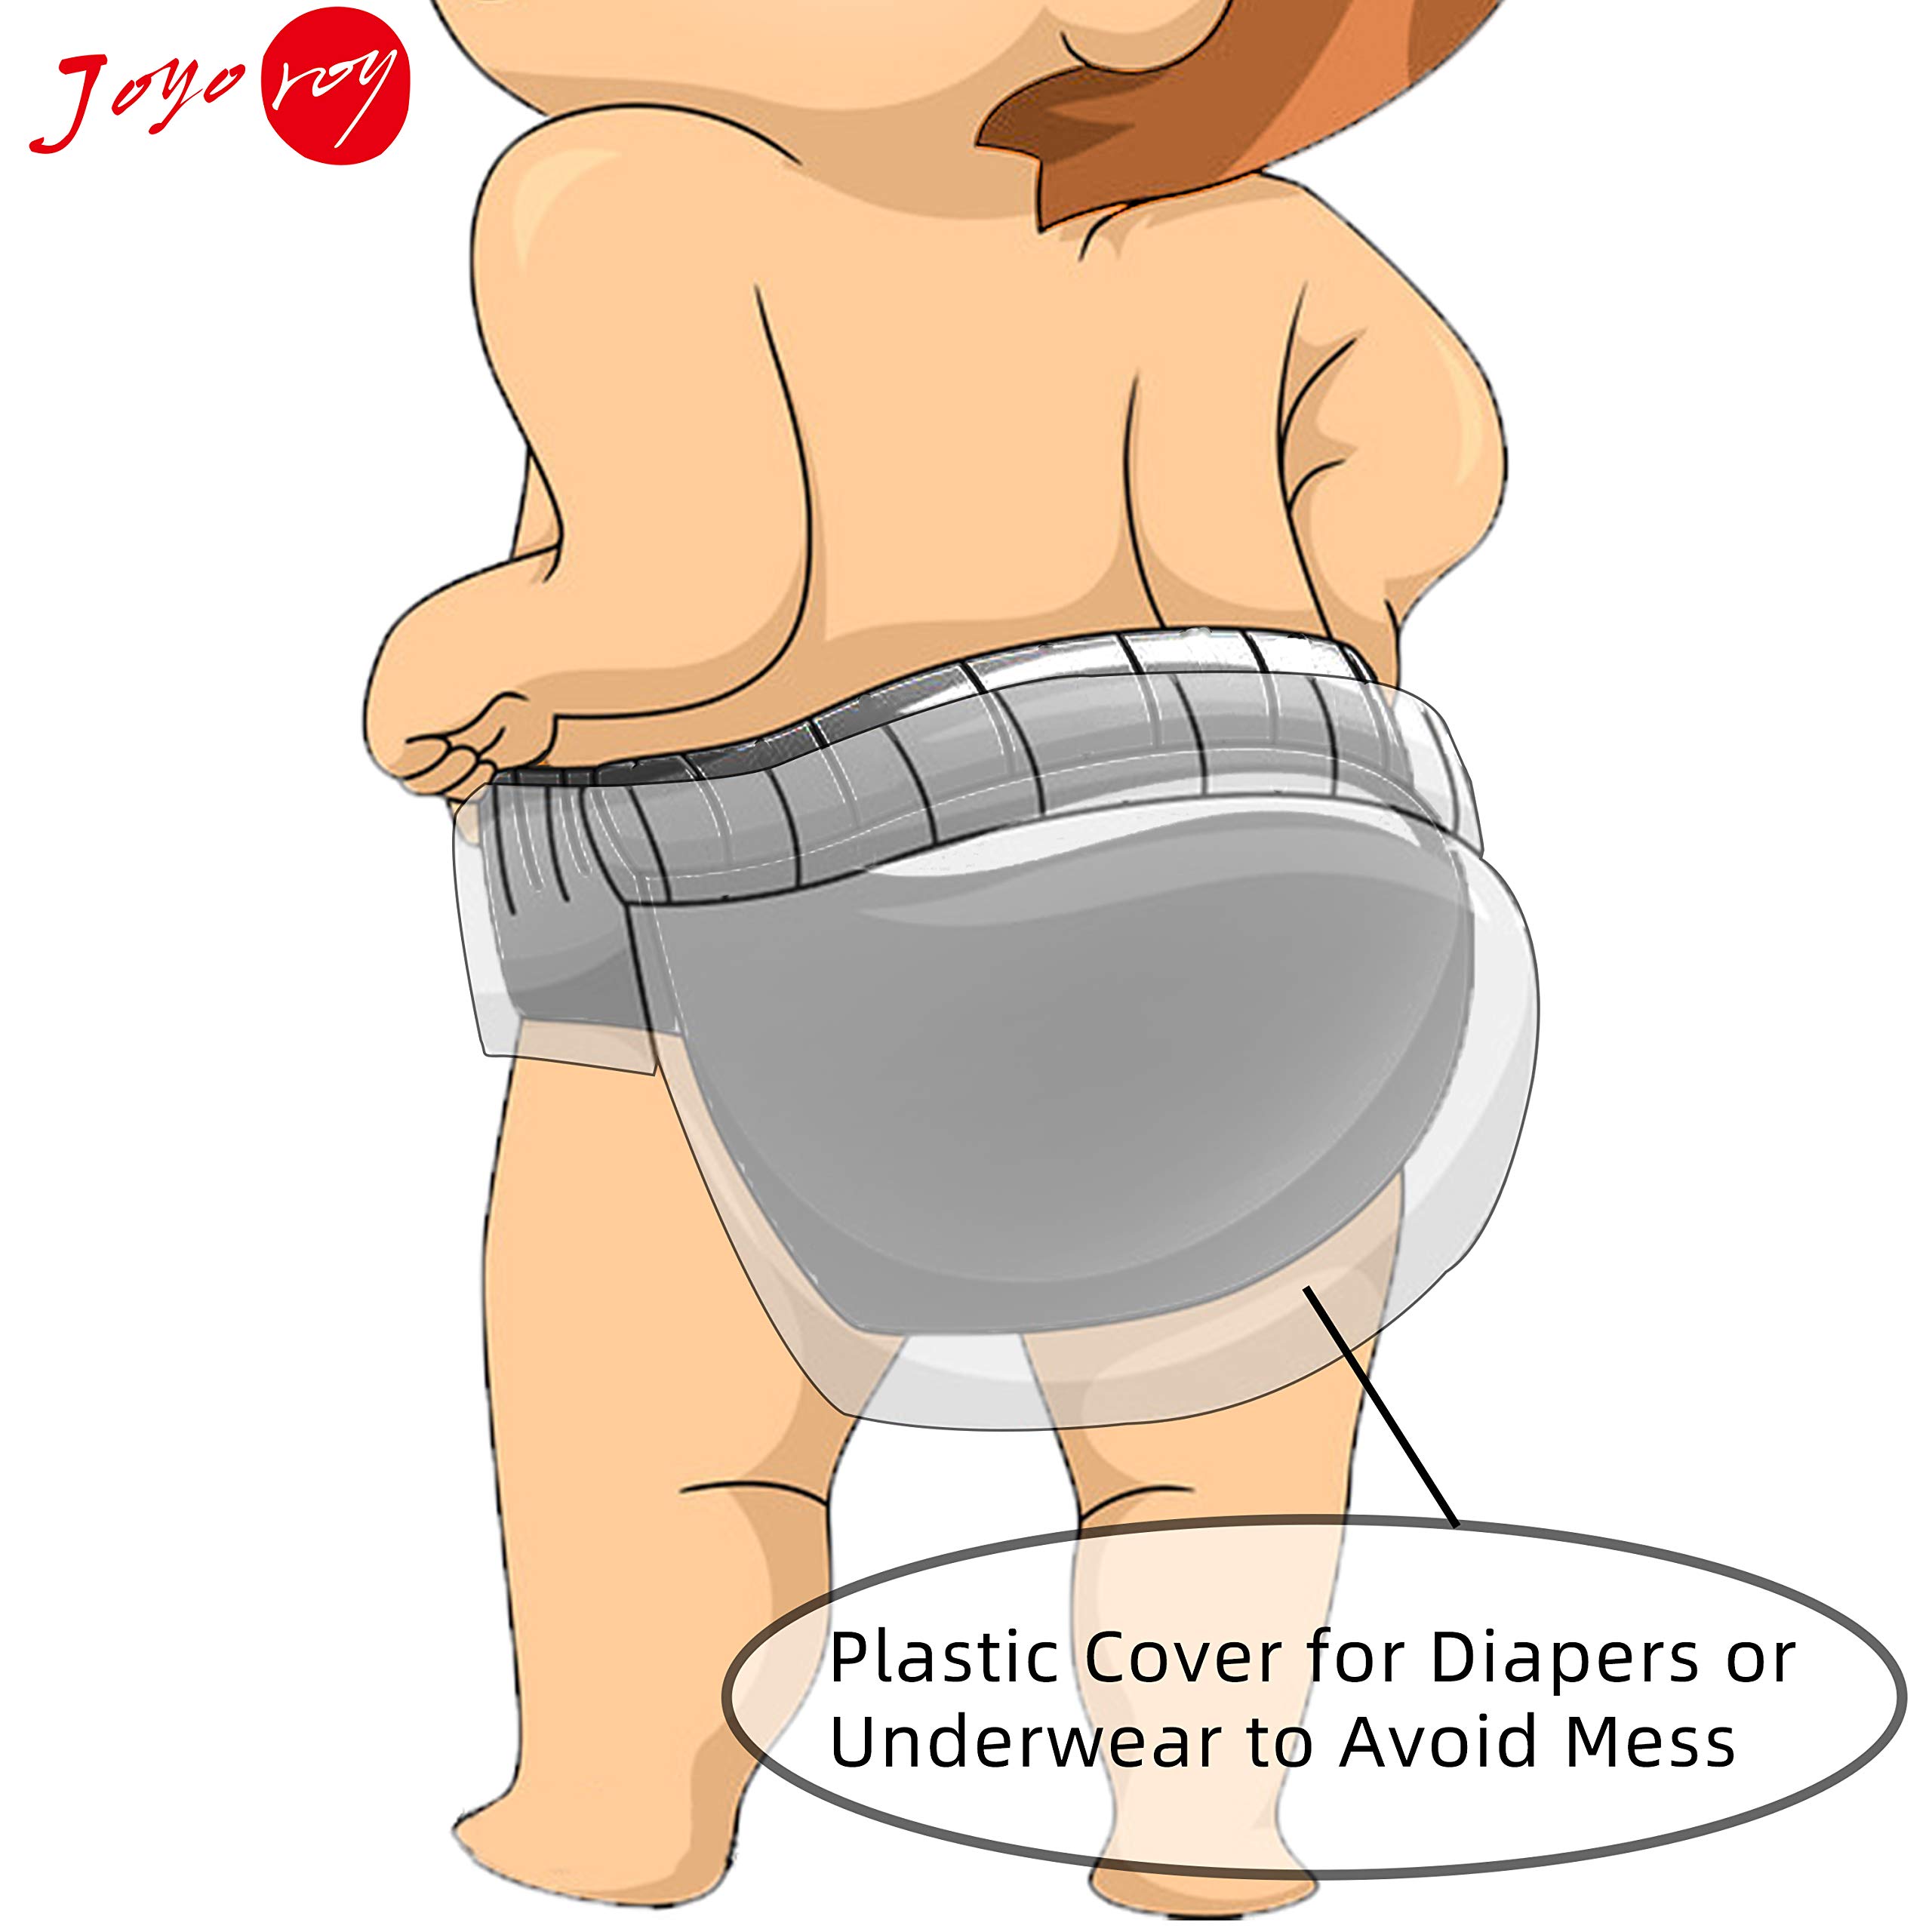  Joyo roy 6Pcs Potty Training Underwear For Girls